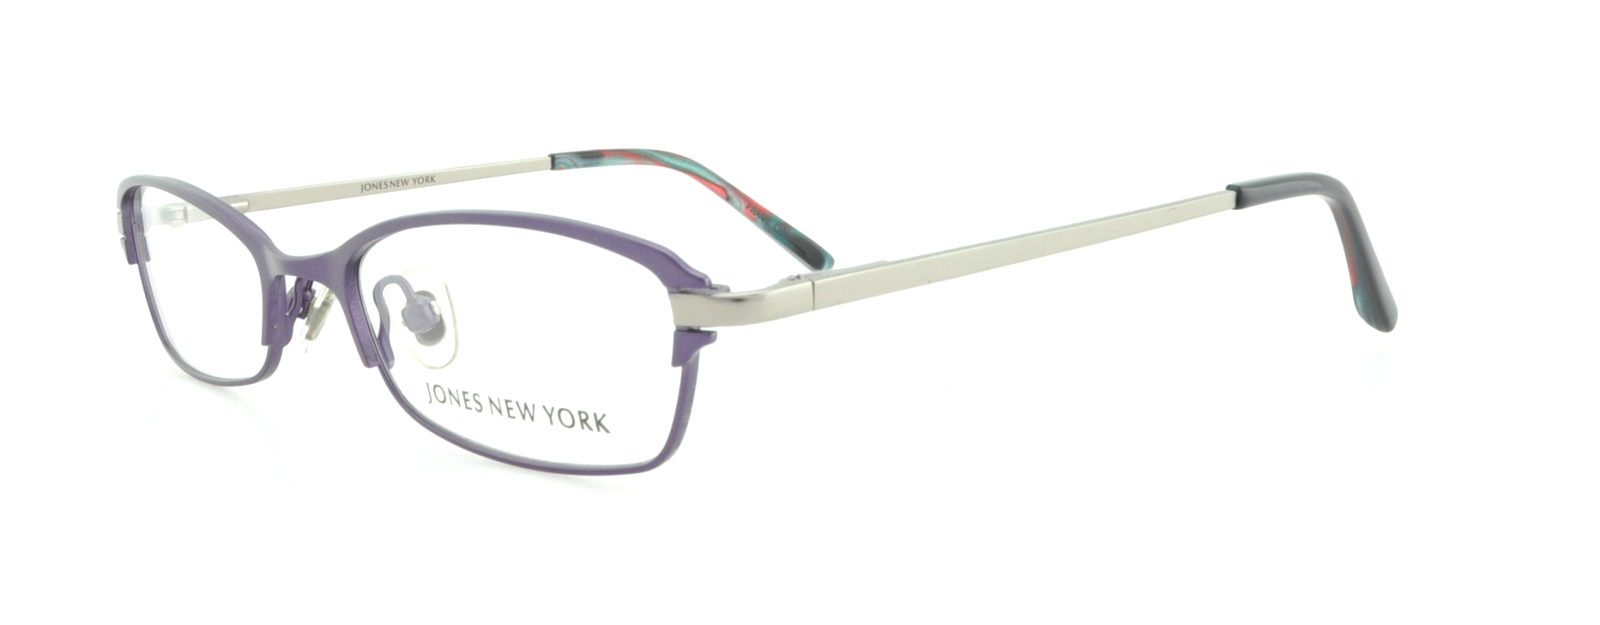 Picture of Jones New York Eyeglasses J468